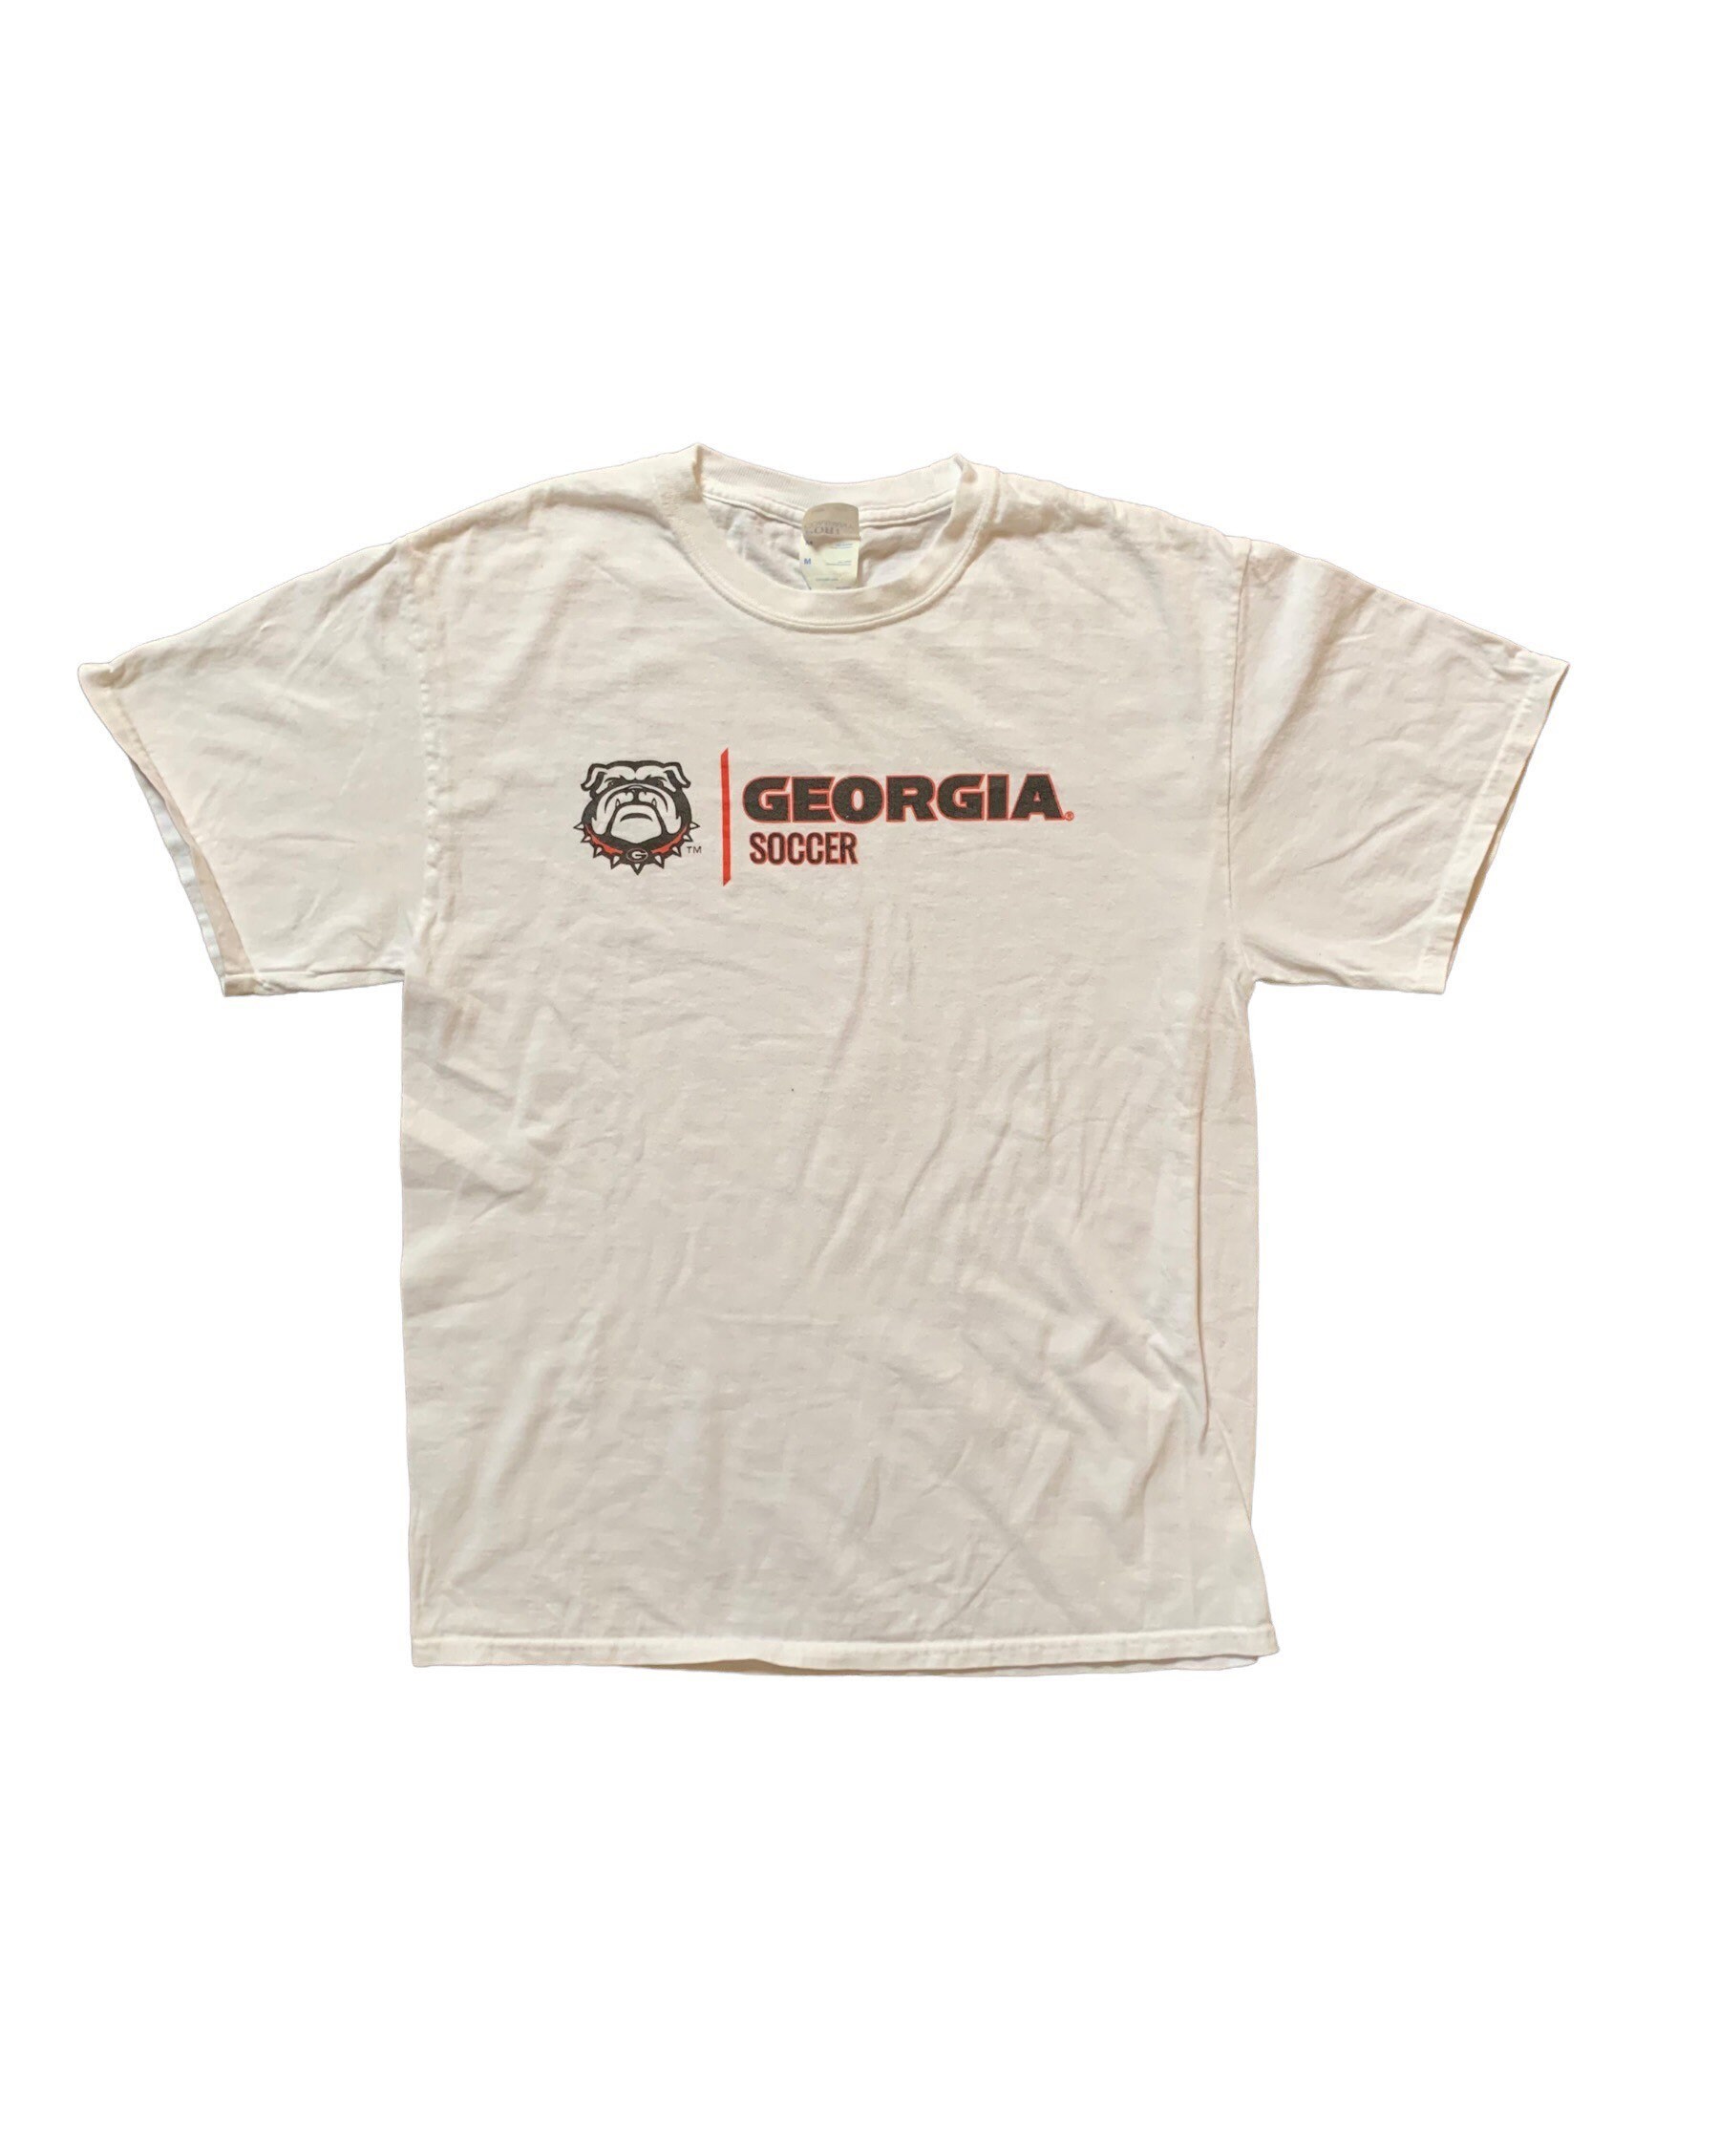 UGA Champion Tennis T-Shirt - Gray XL